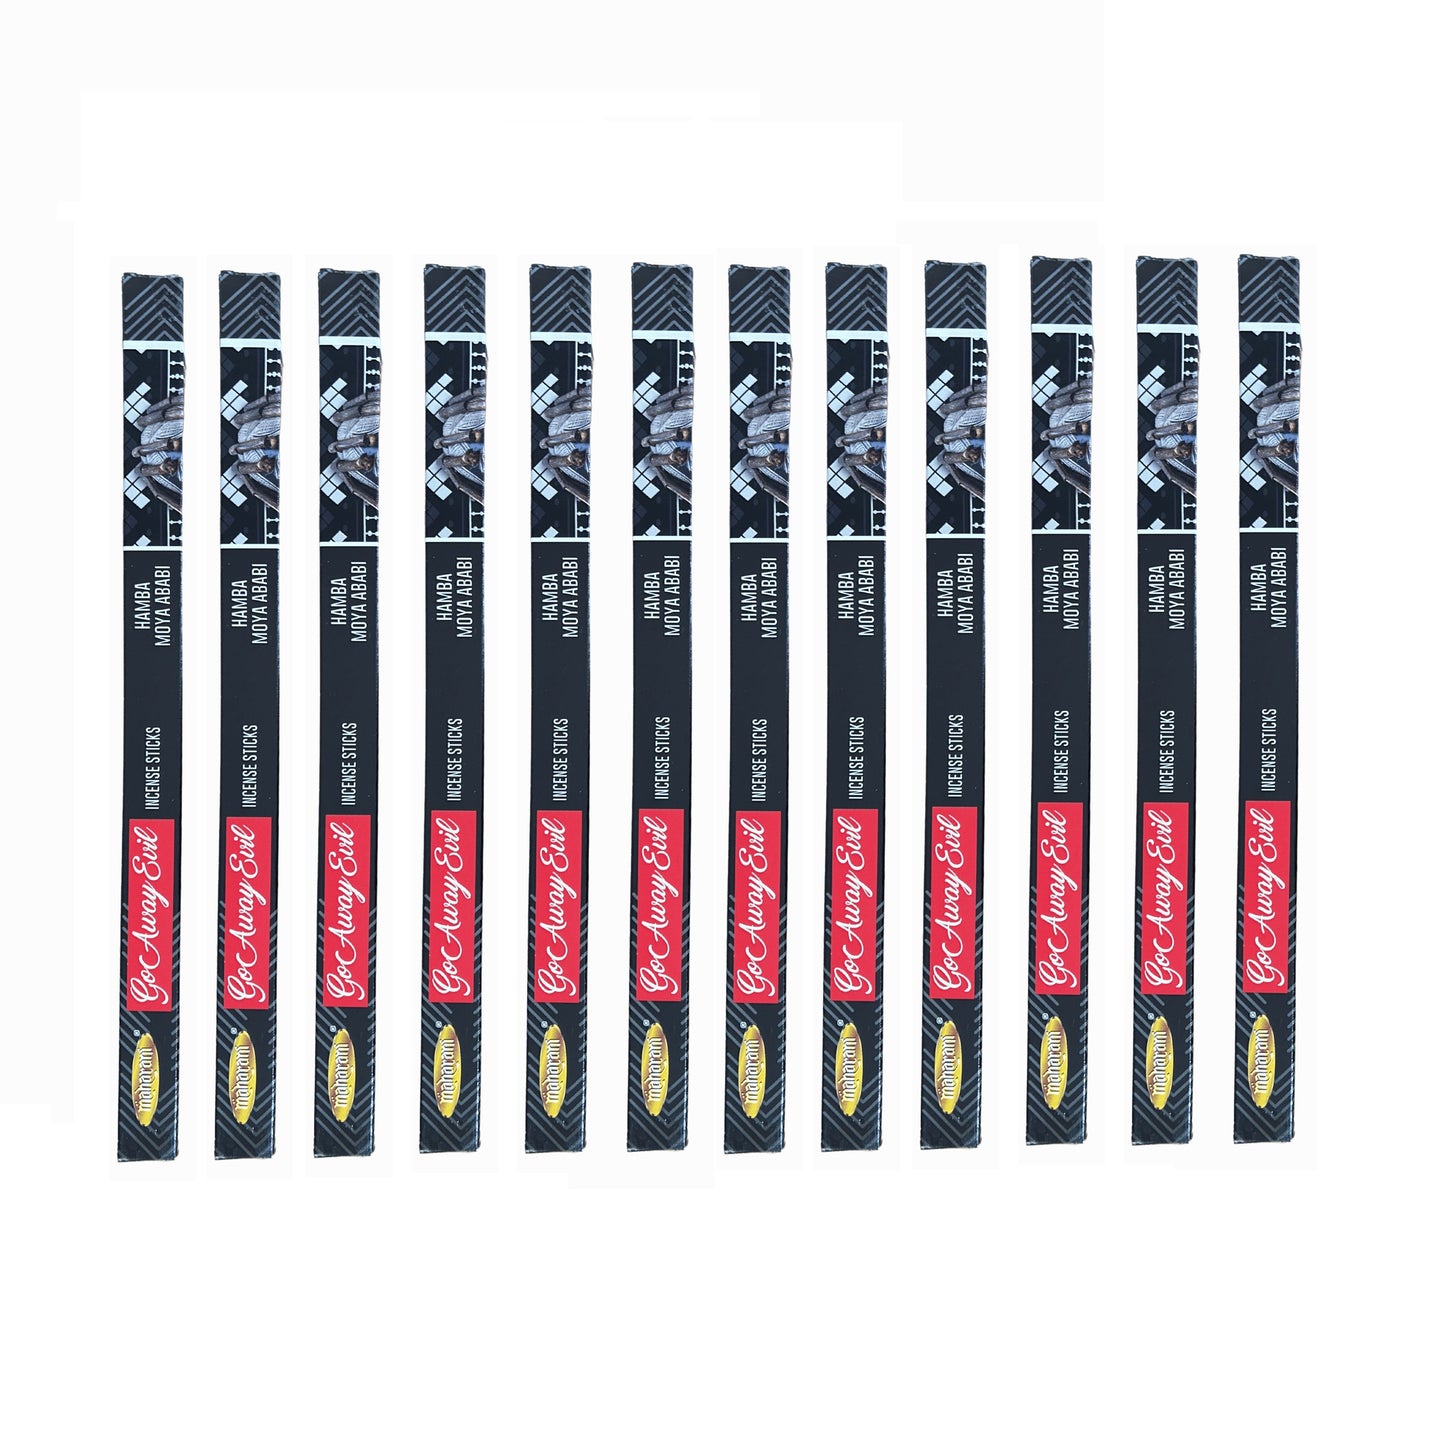 Maharani Incense Sticks - 12 Packs of 10 Units